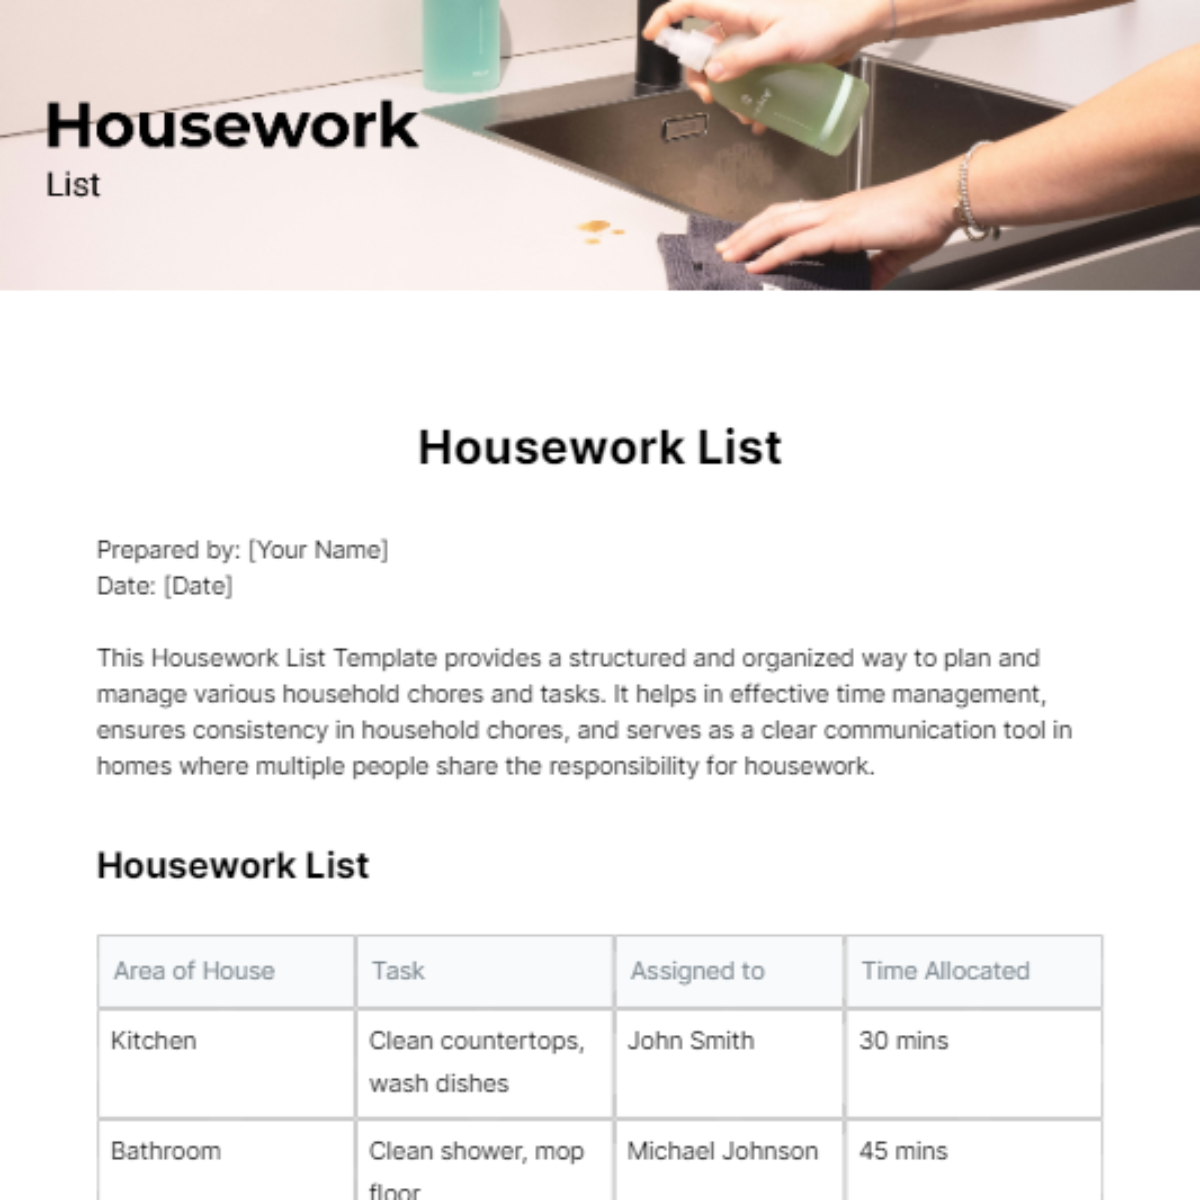 Housework List Template